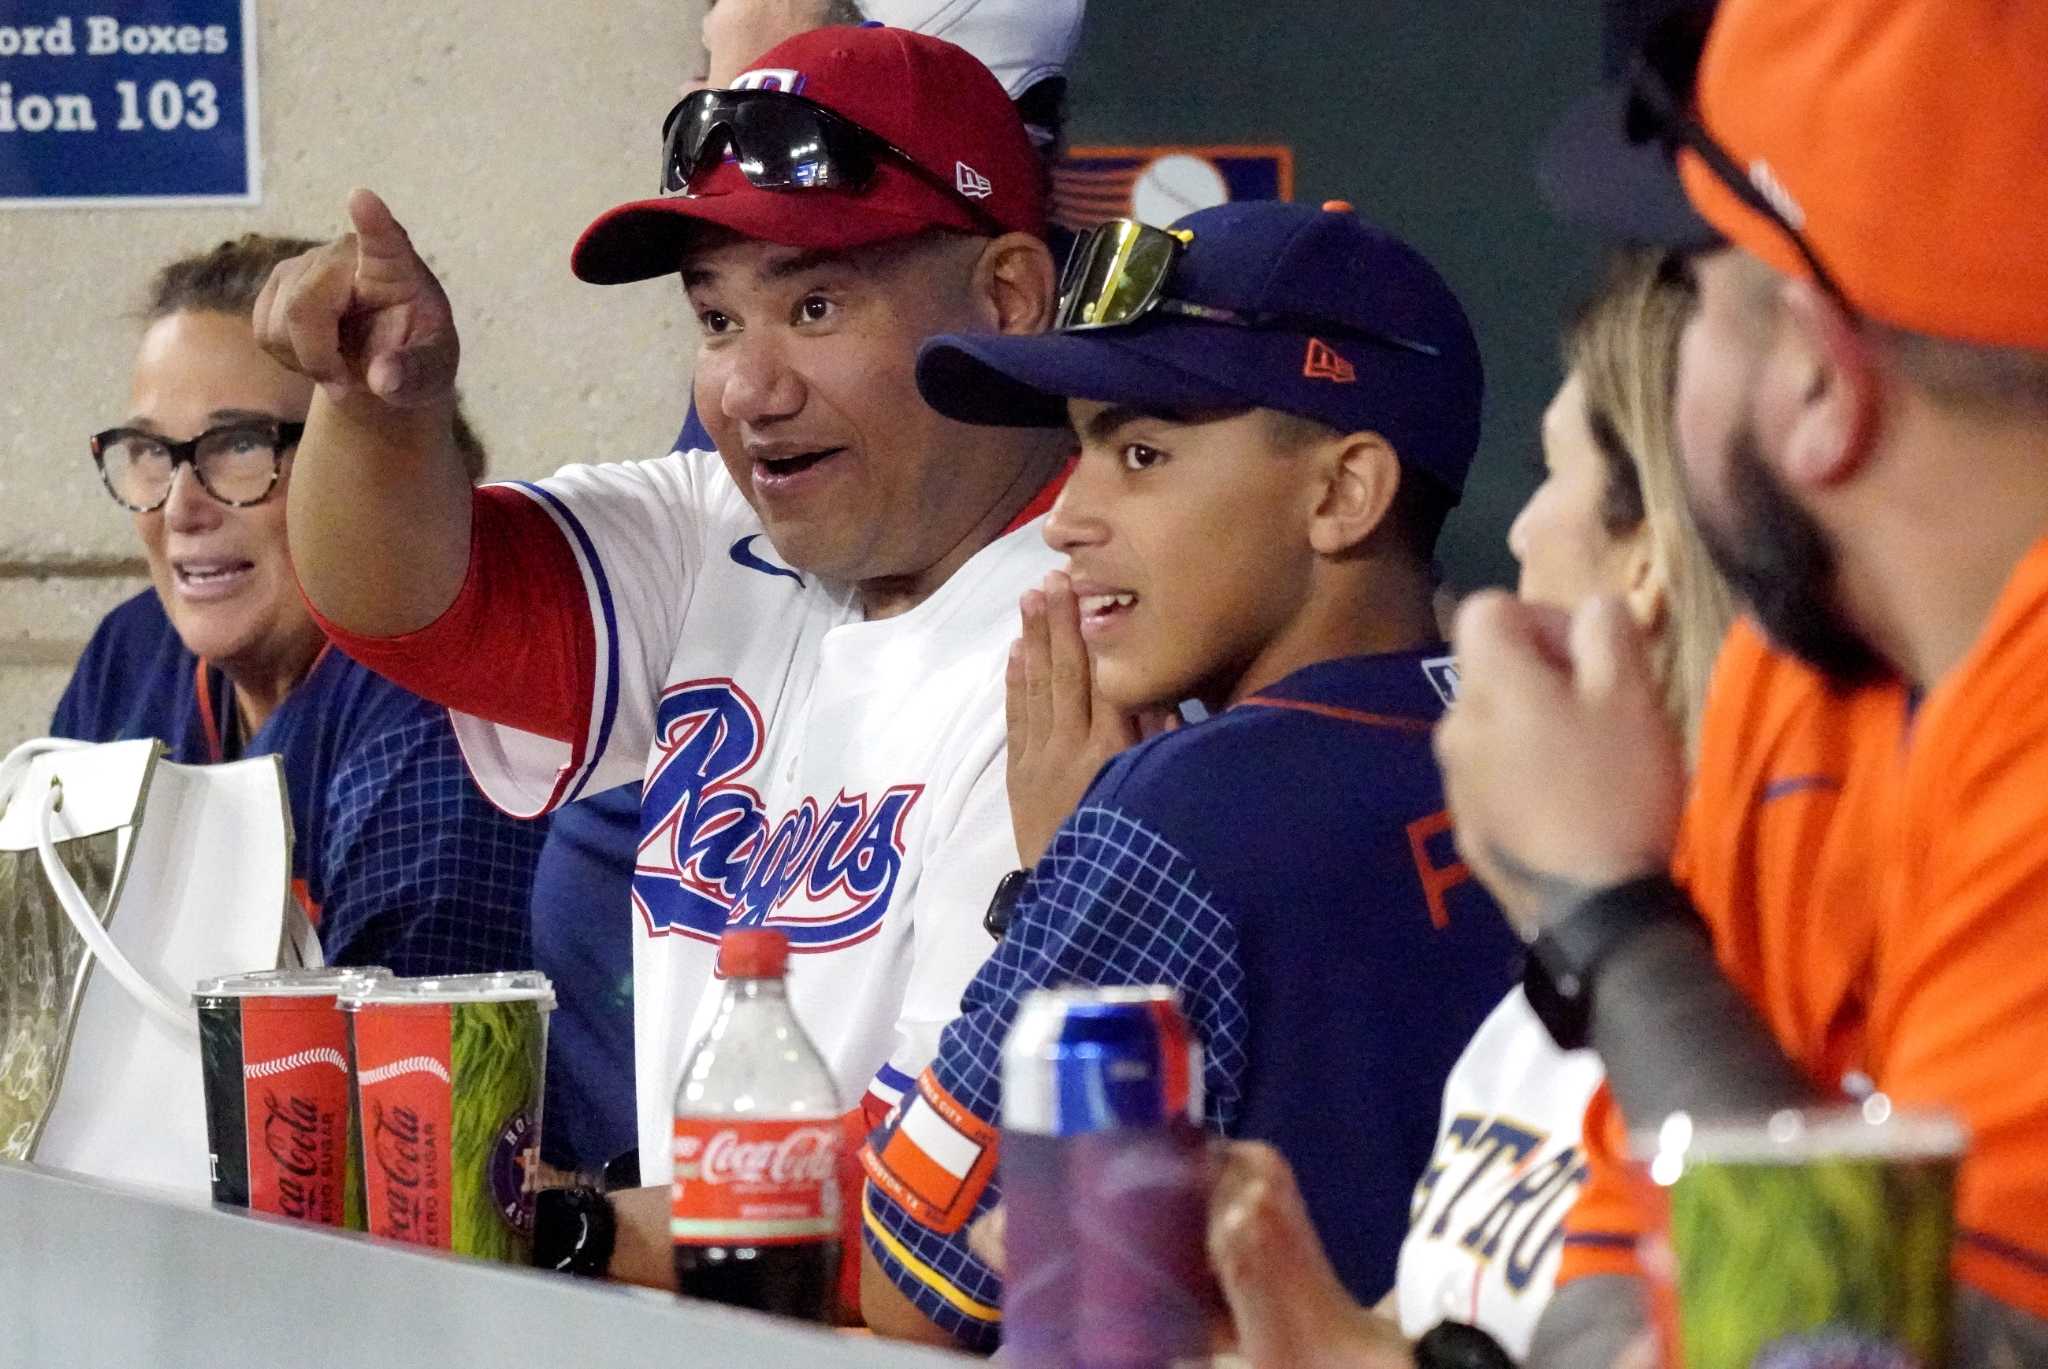 Texas baseball battle divides families for Astros, Rangers fandoms